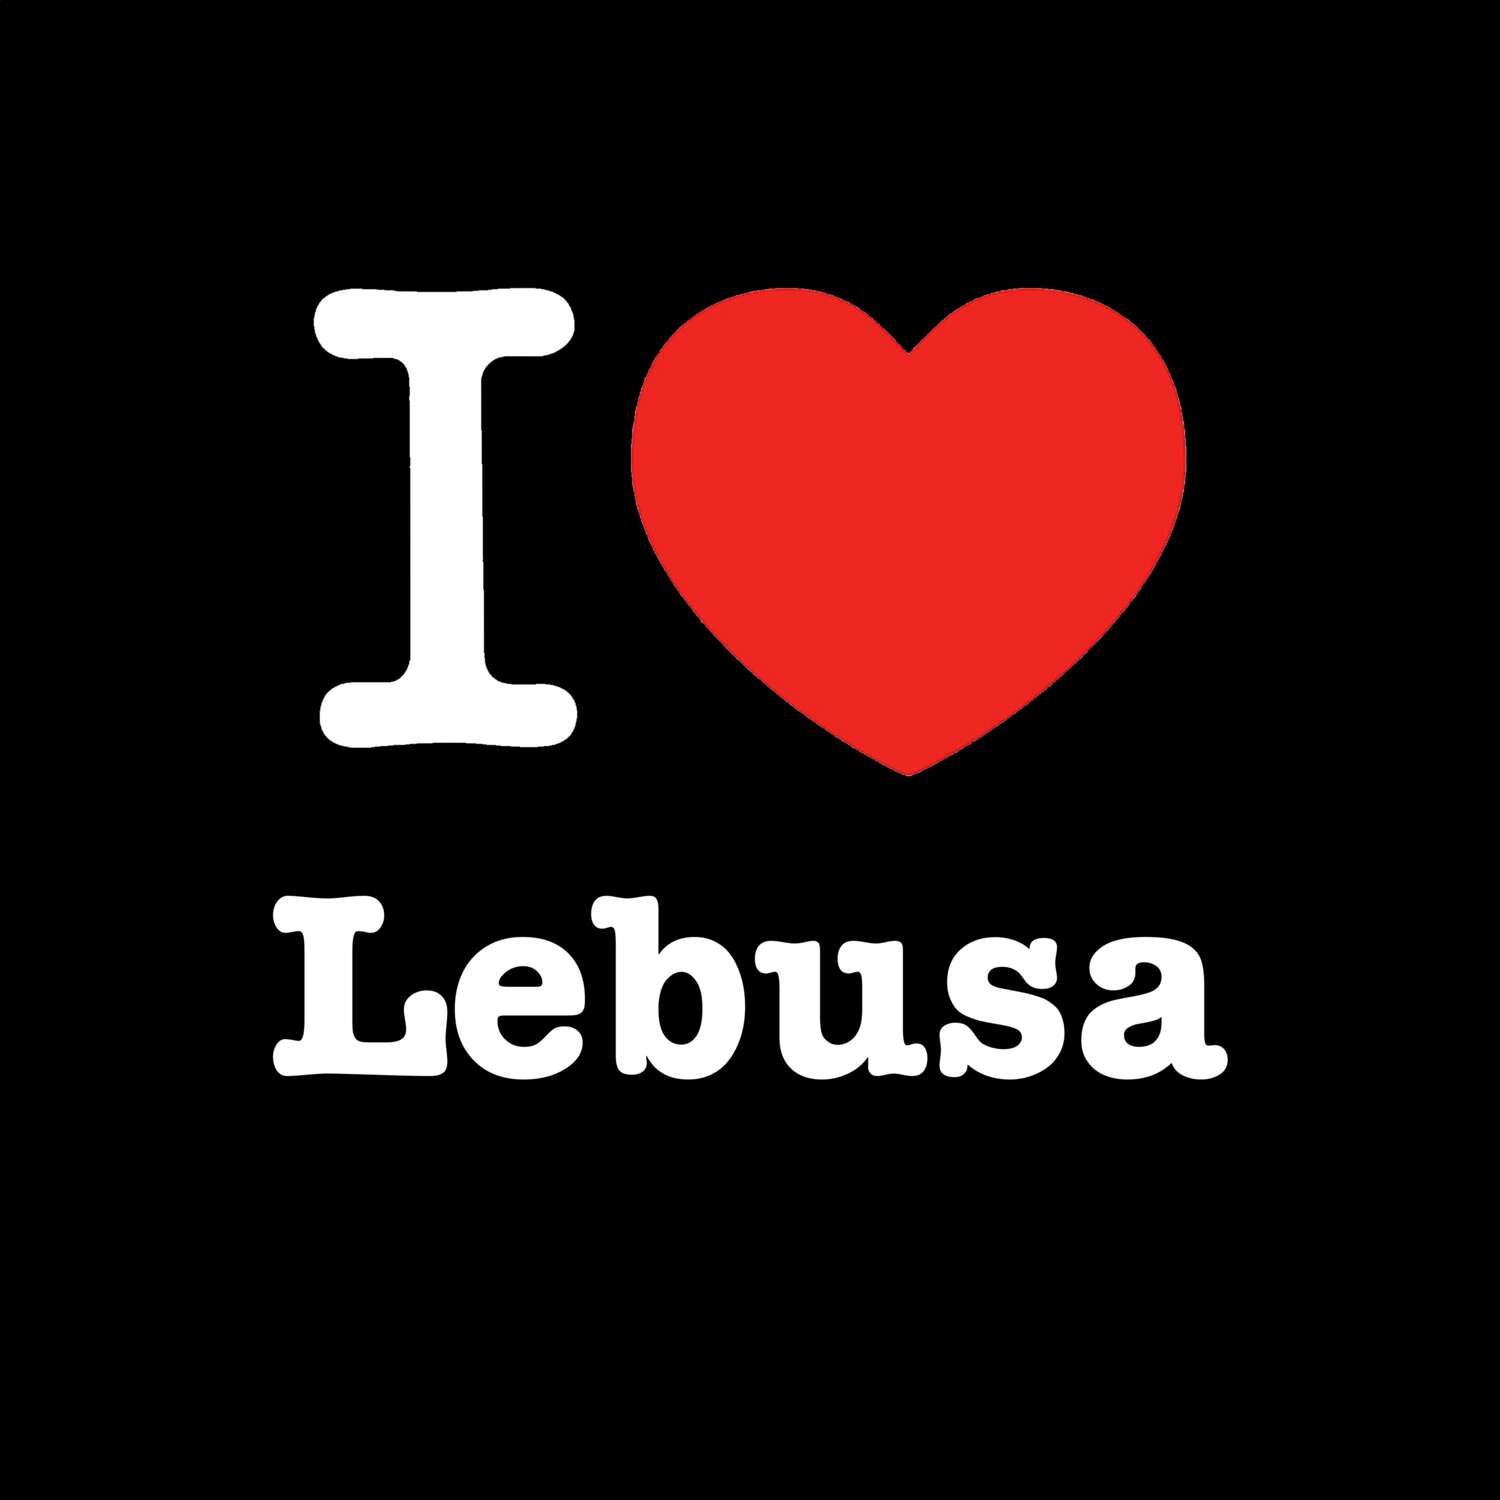 Lebusa T-Shirt »I love«